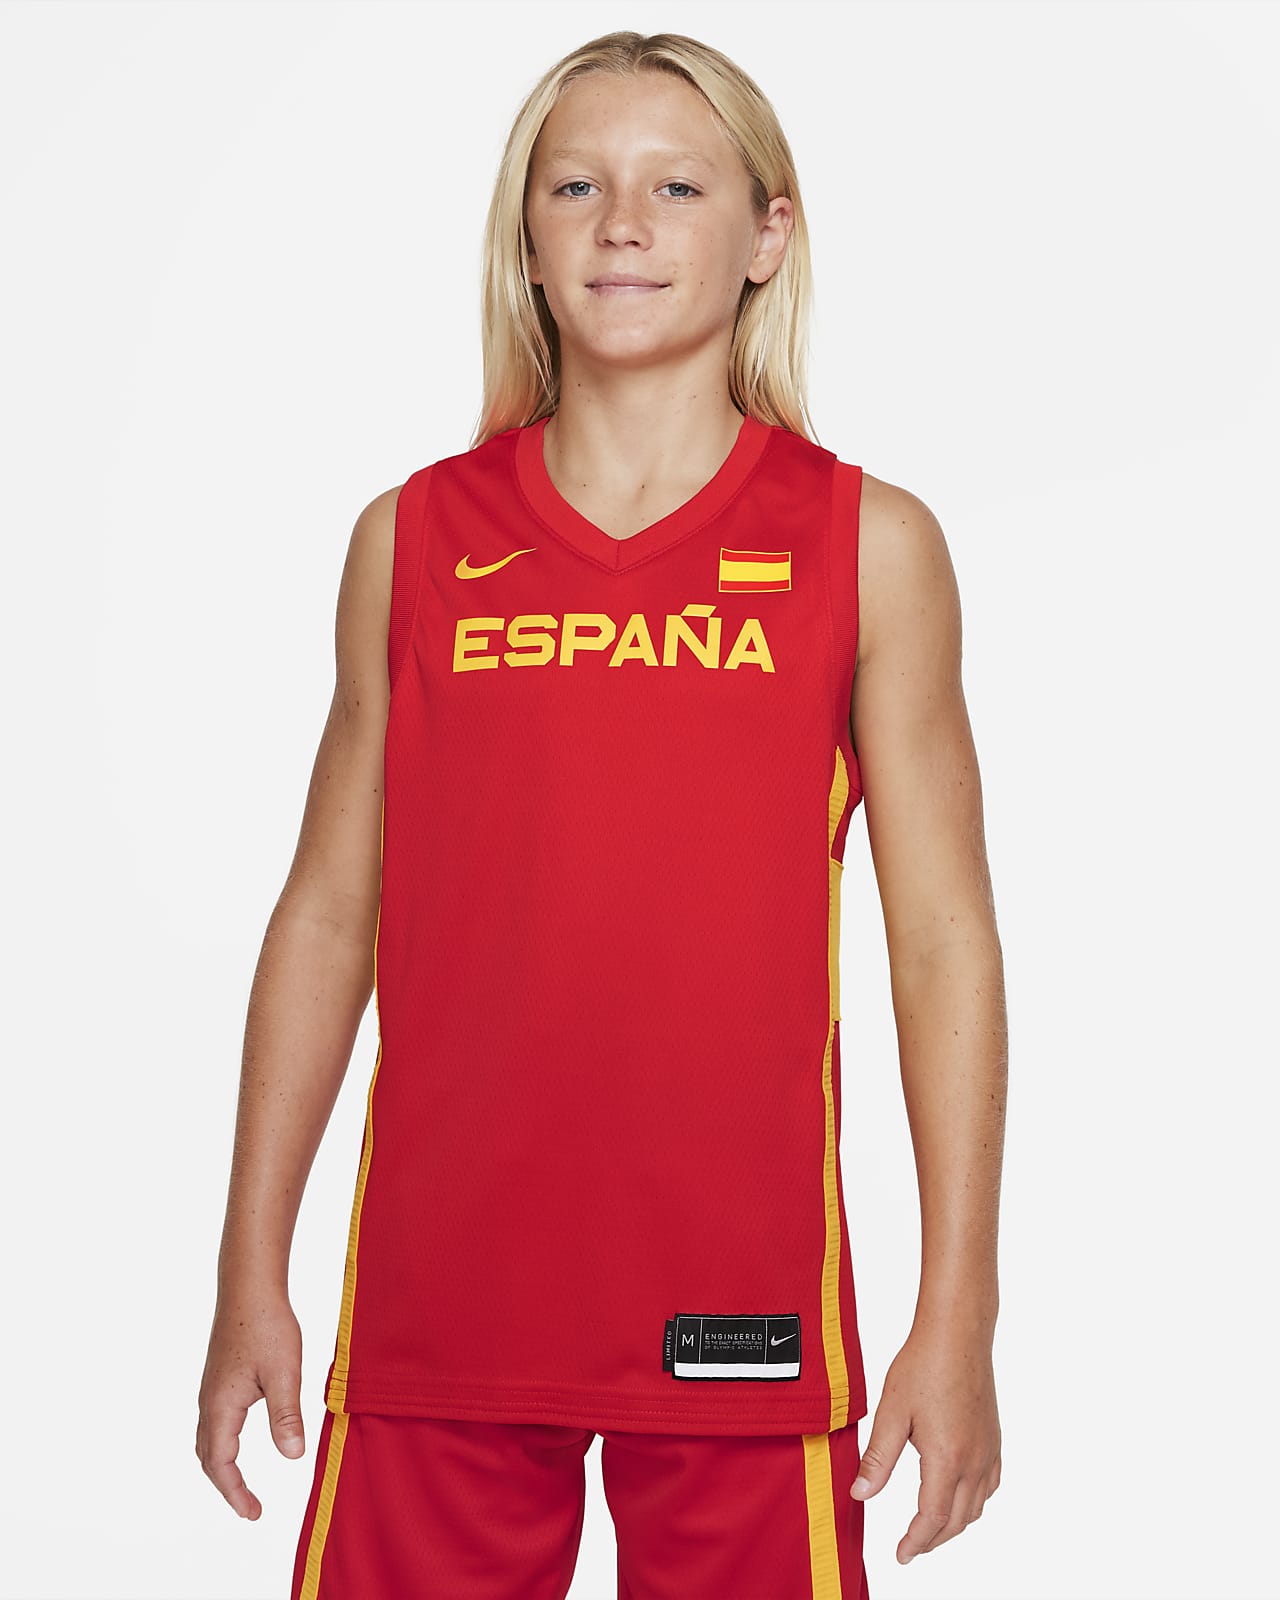 Spanien (Road) Nike Basketballtrikot für ältere Kinder